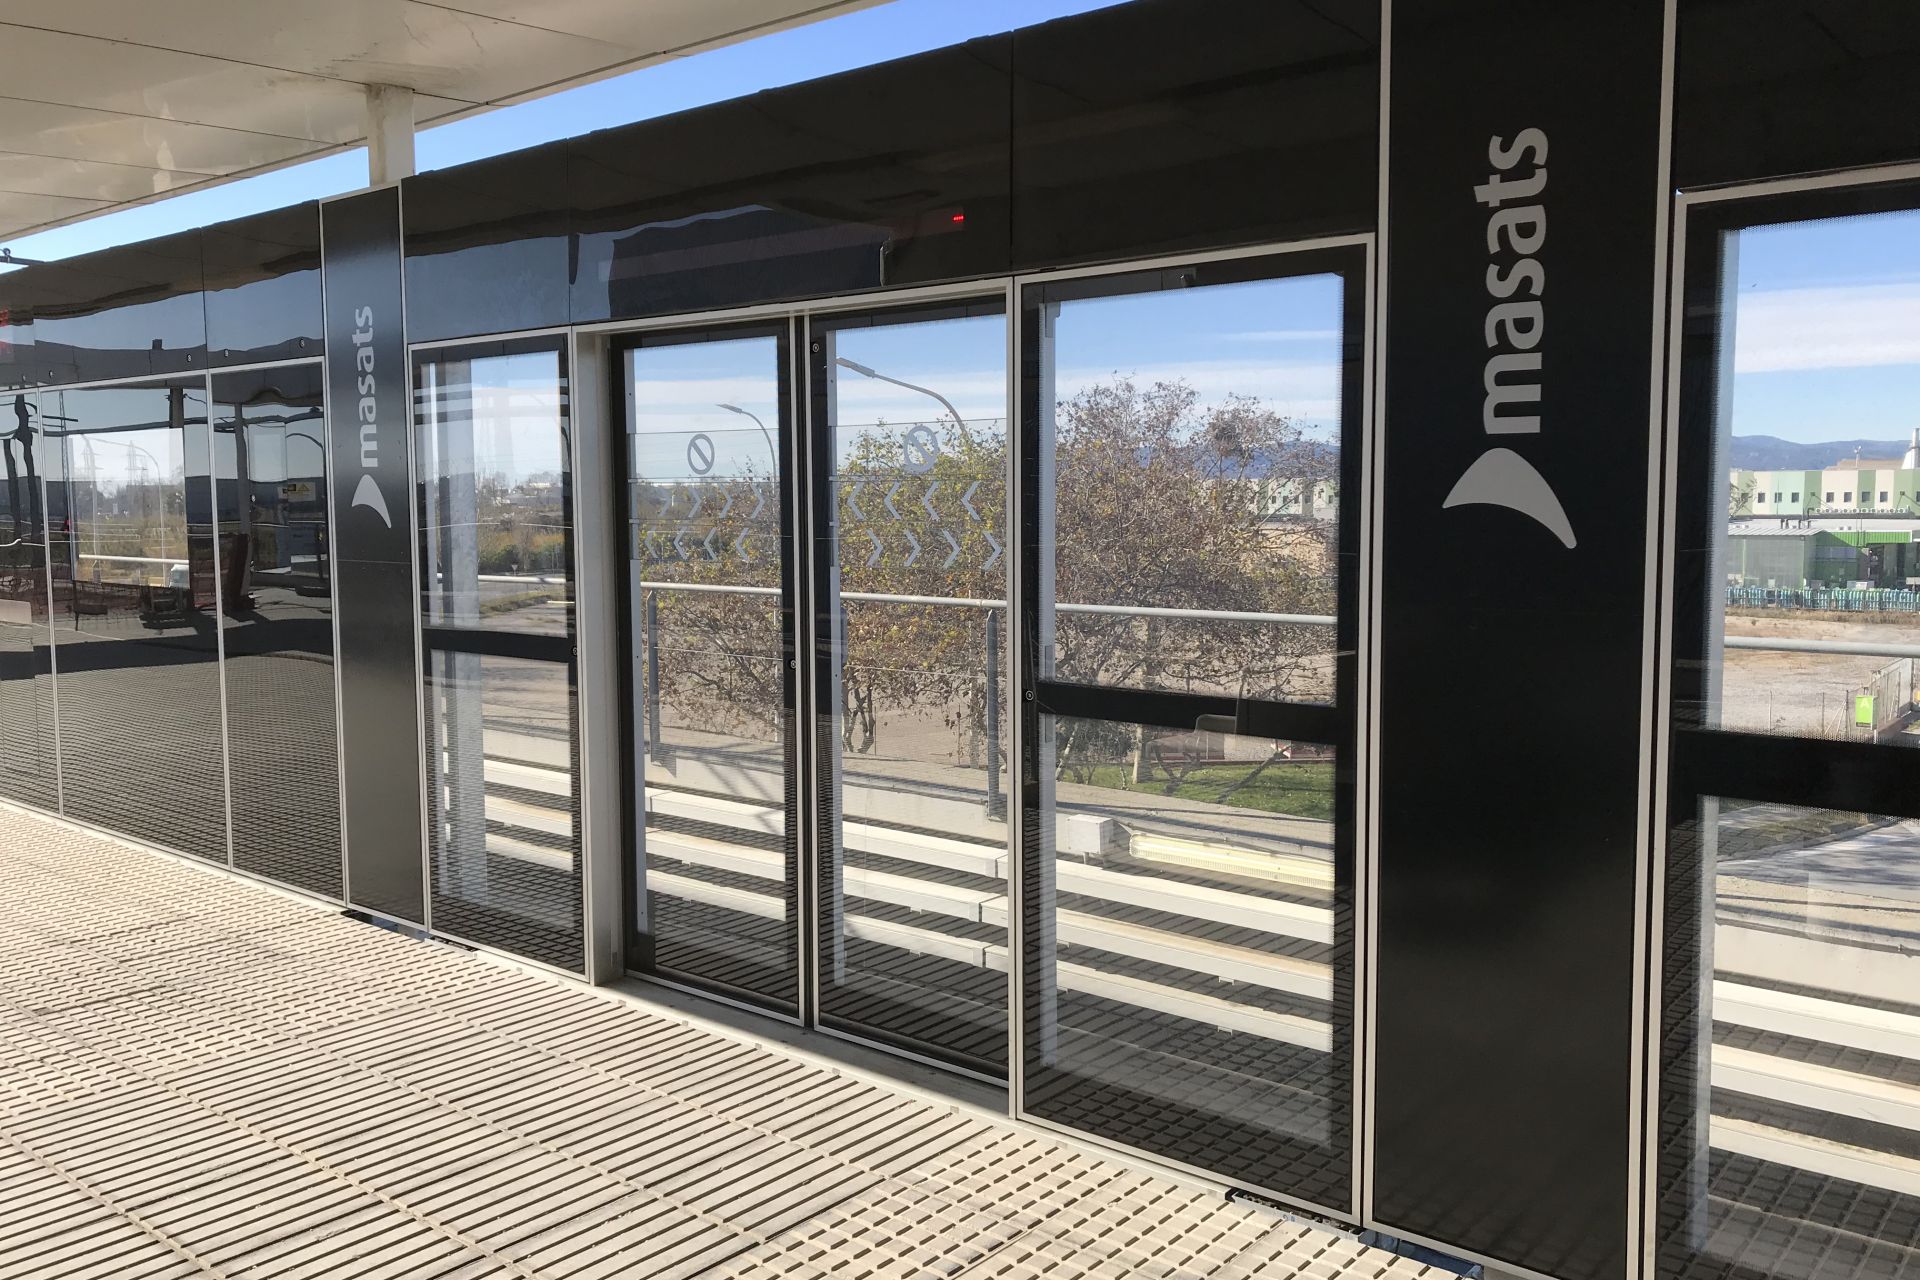 Masats chosen to supply PSD platform screen doors for the Trinitat Nova station